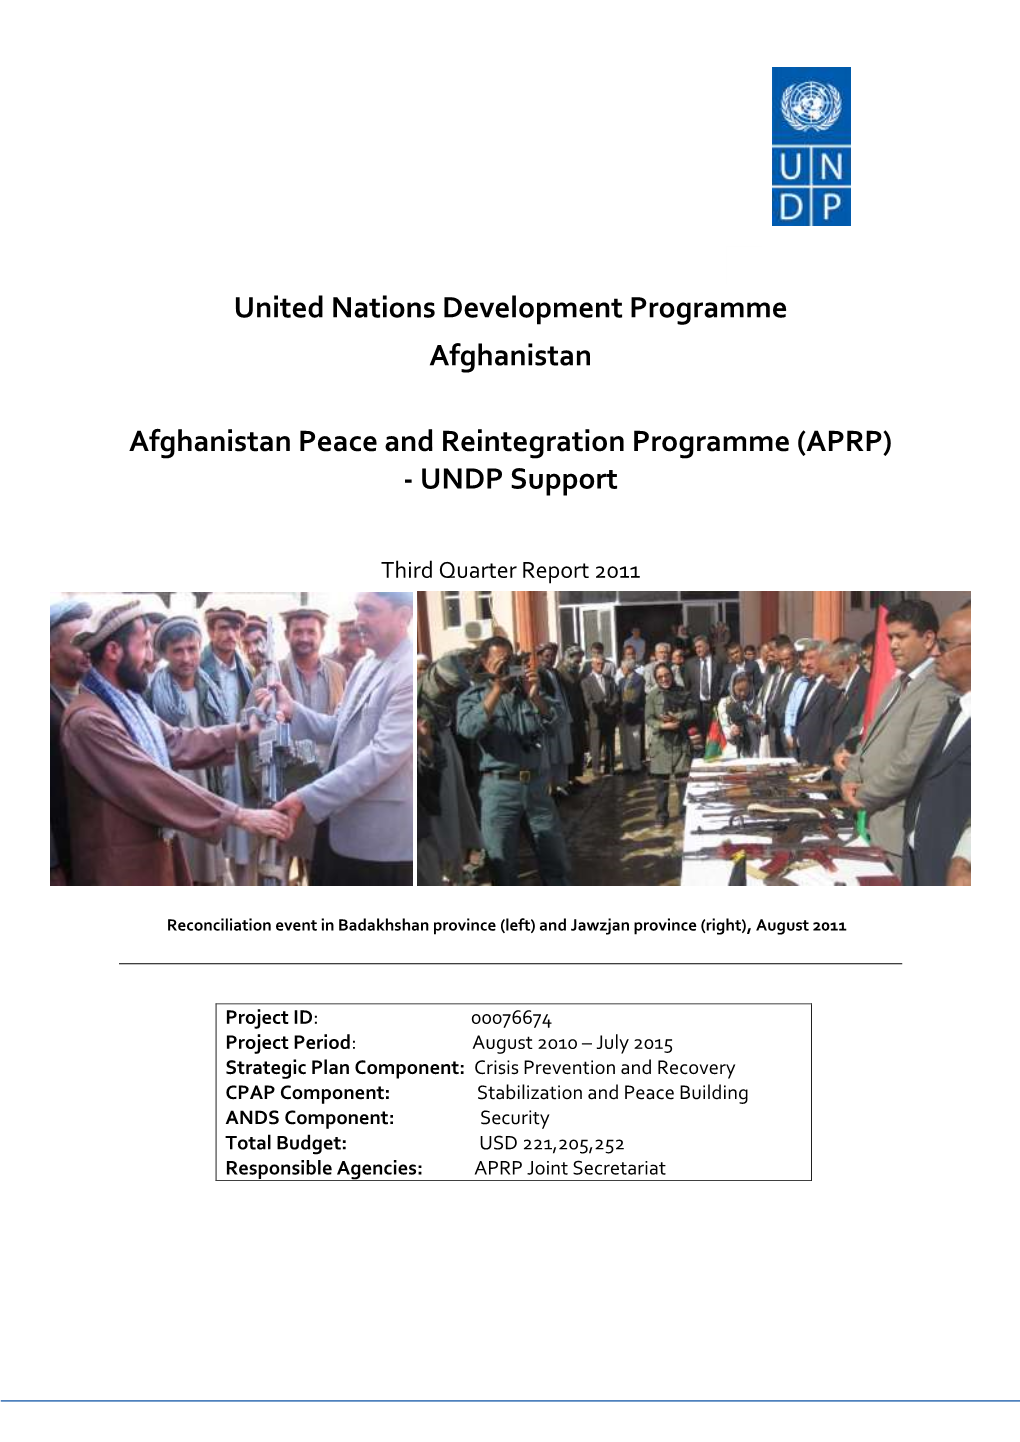 United Nations Development Programme Afghanistan Afghanistan Peace and Reintegration Programme (APRP)